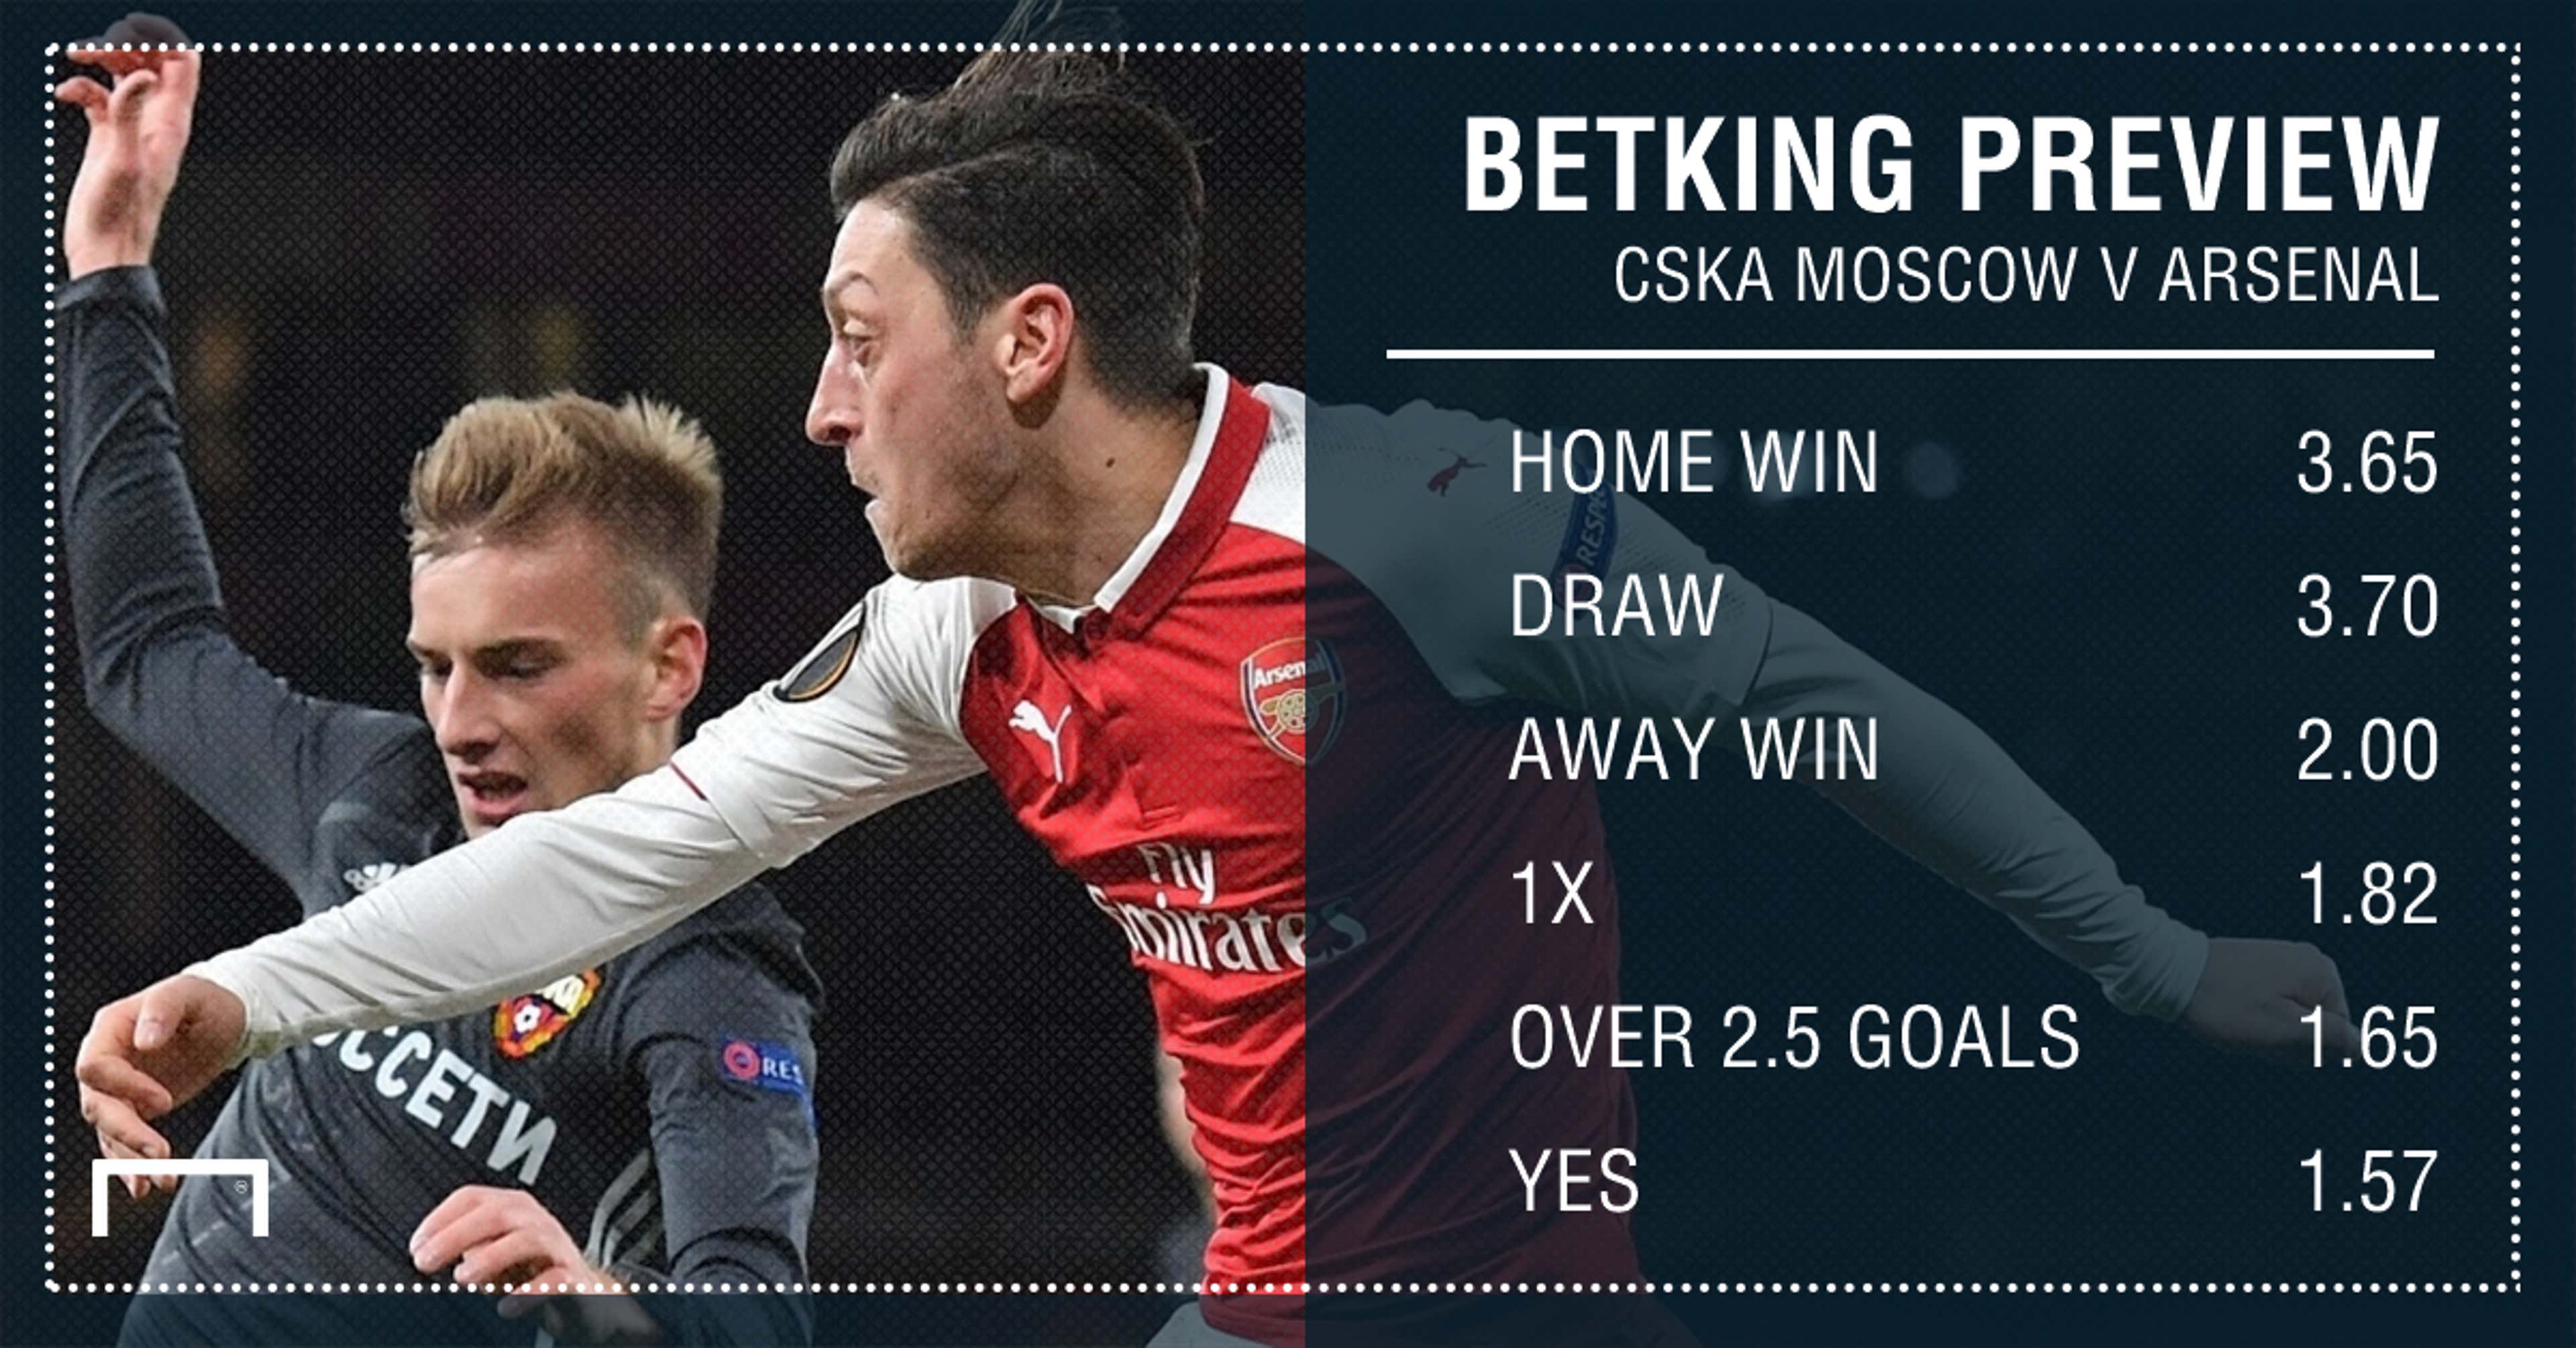 CSKA Moscow v Arsenal PS